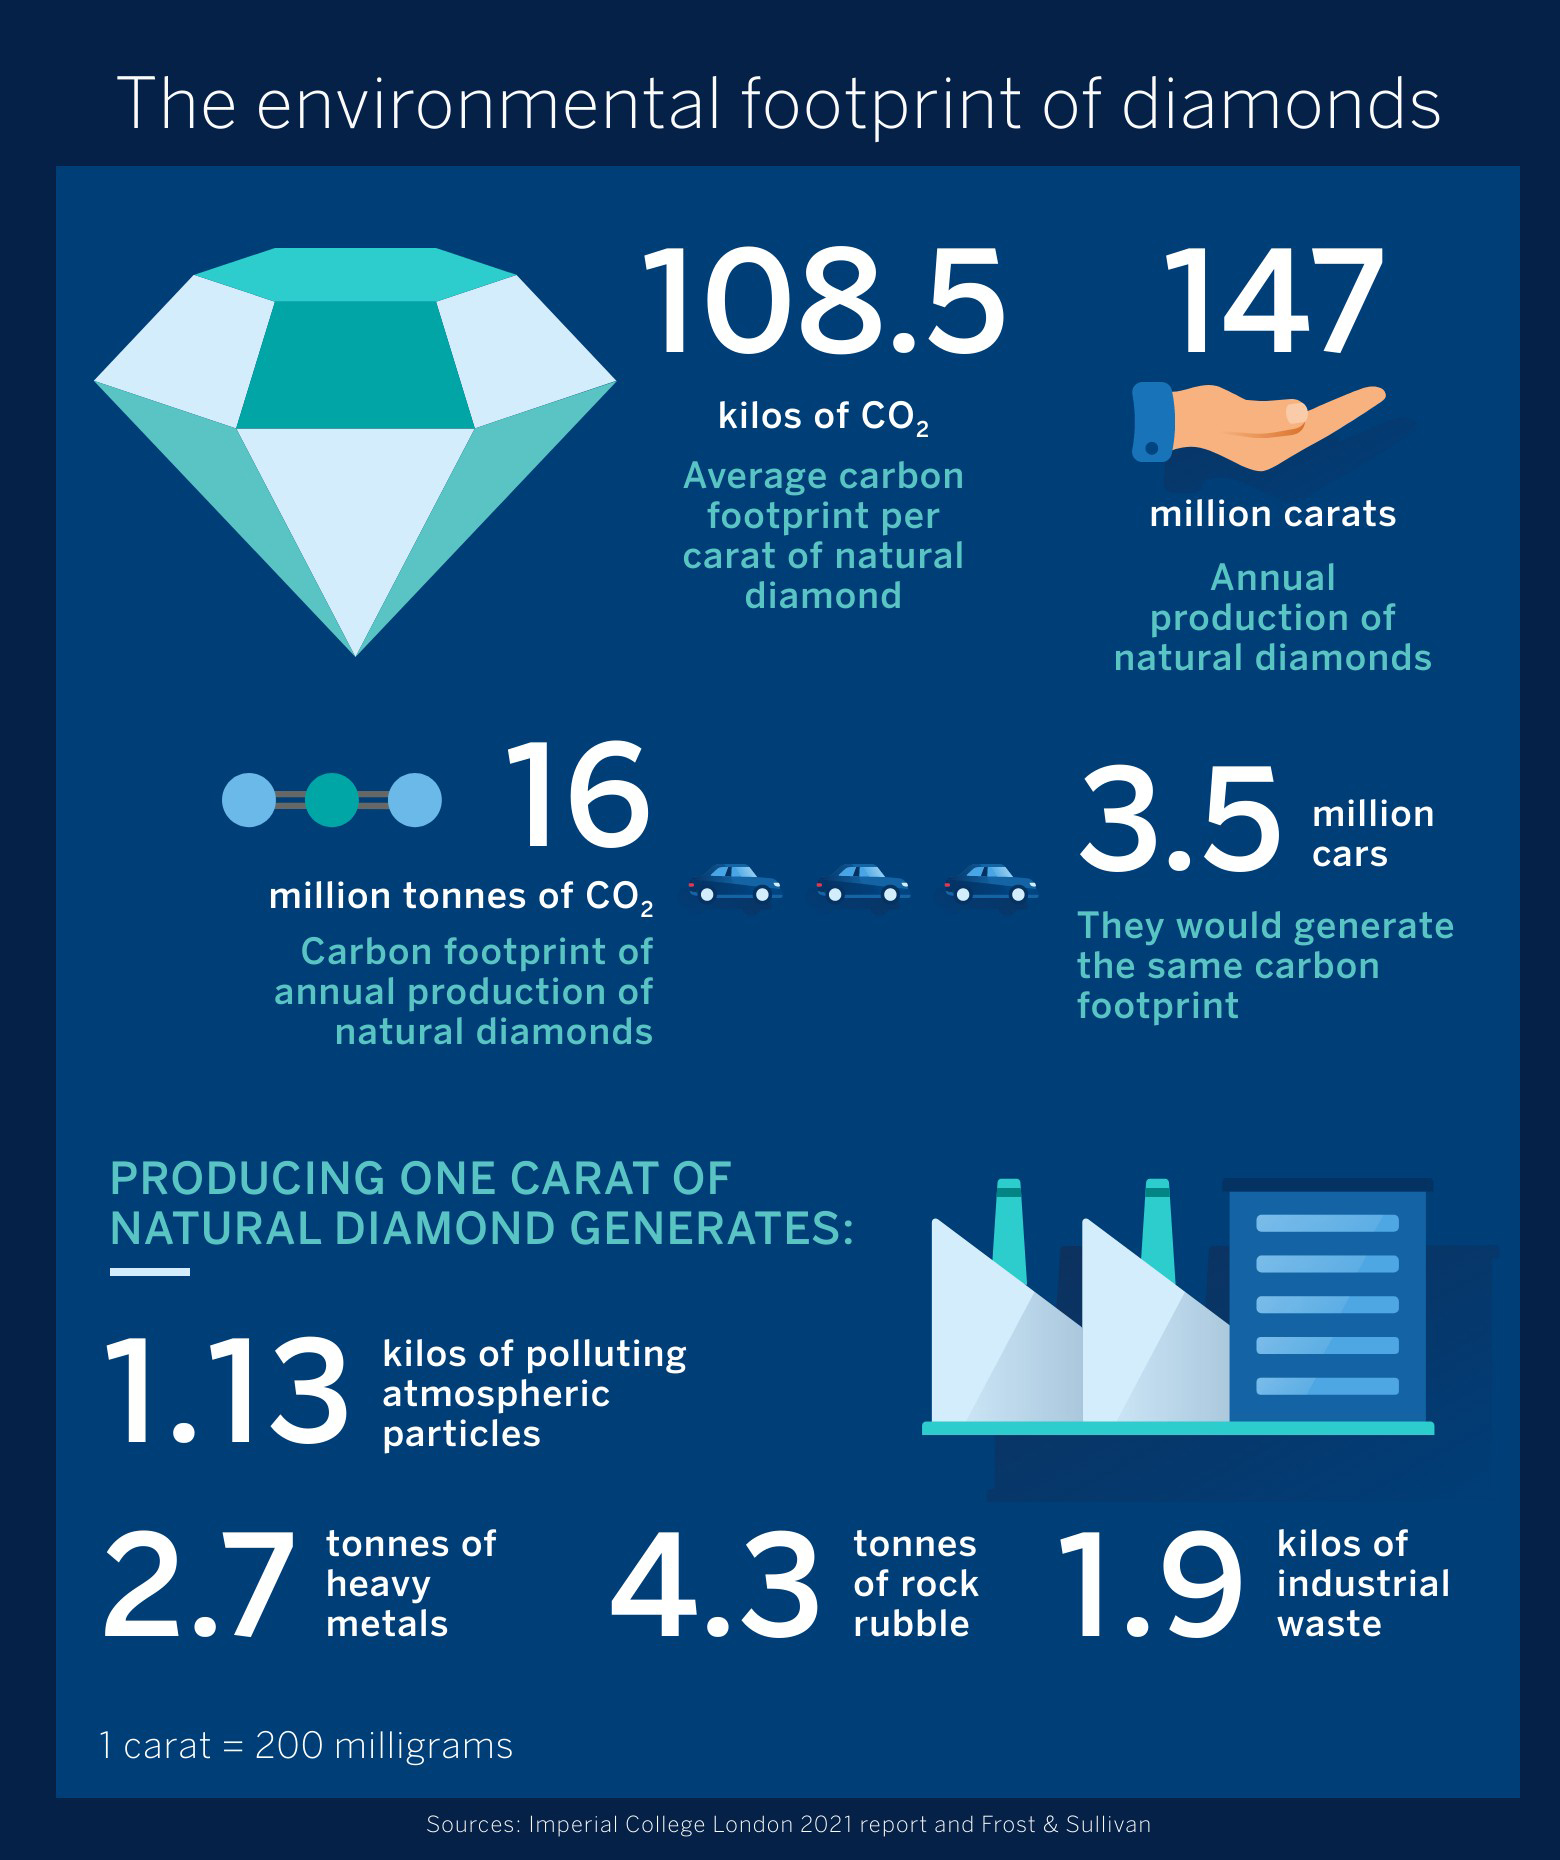 BBVA-OpenMind-the environmental footprint of diamonds